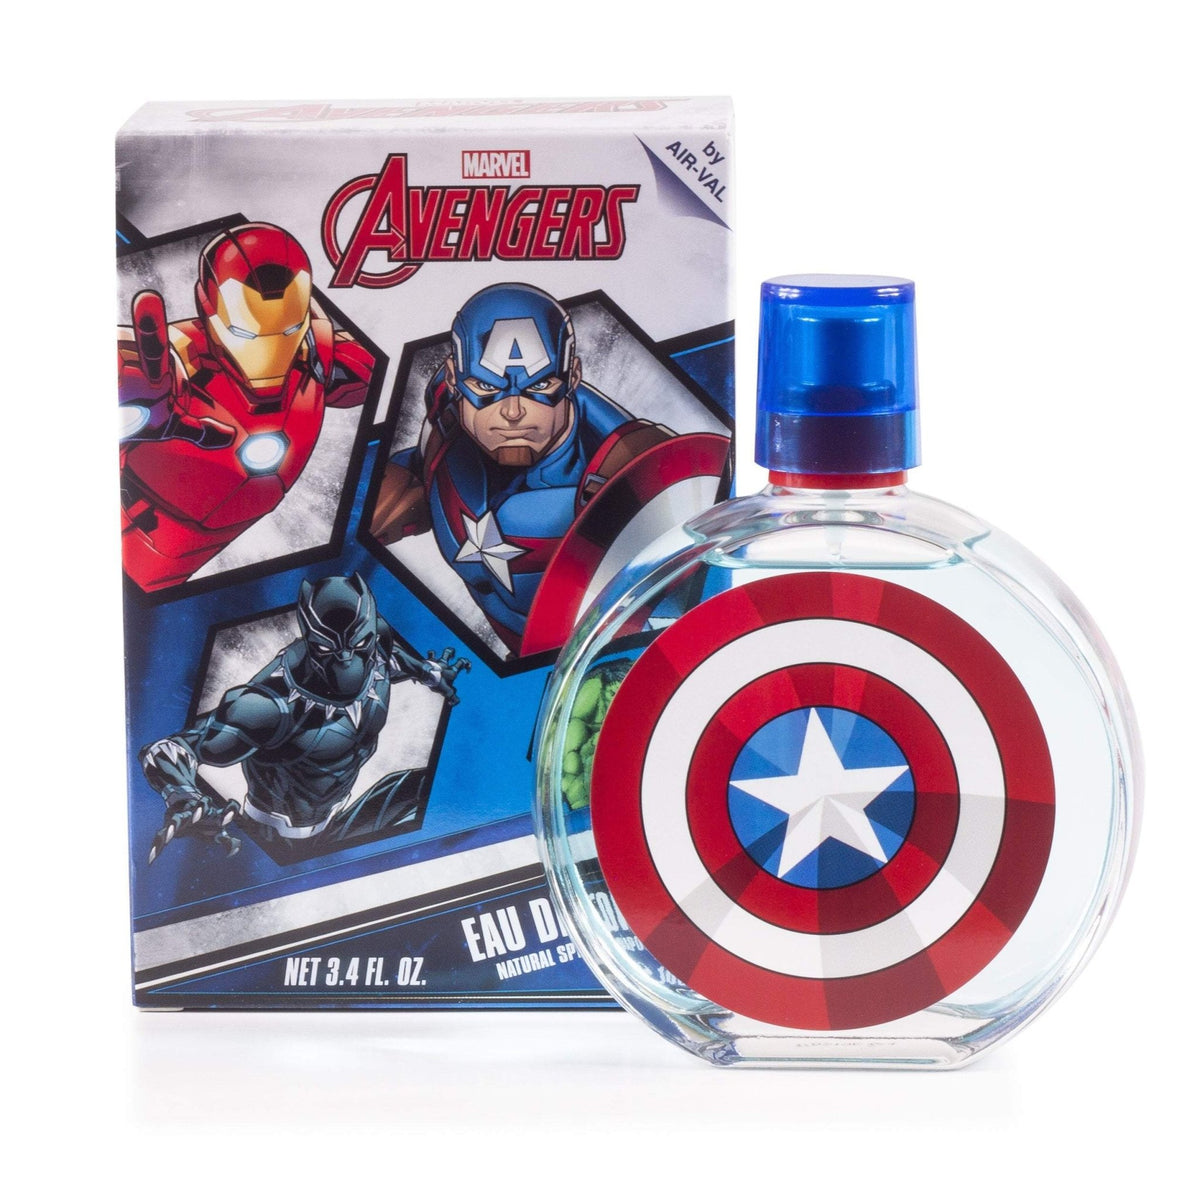 Avengers Eau de Toilette Spray for Boys by Marvel 3.4 oz.